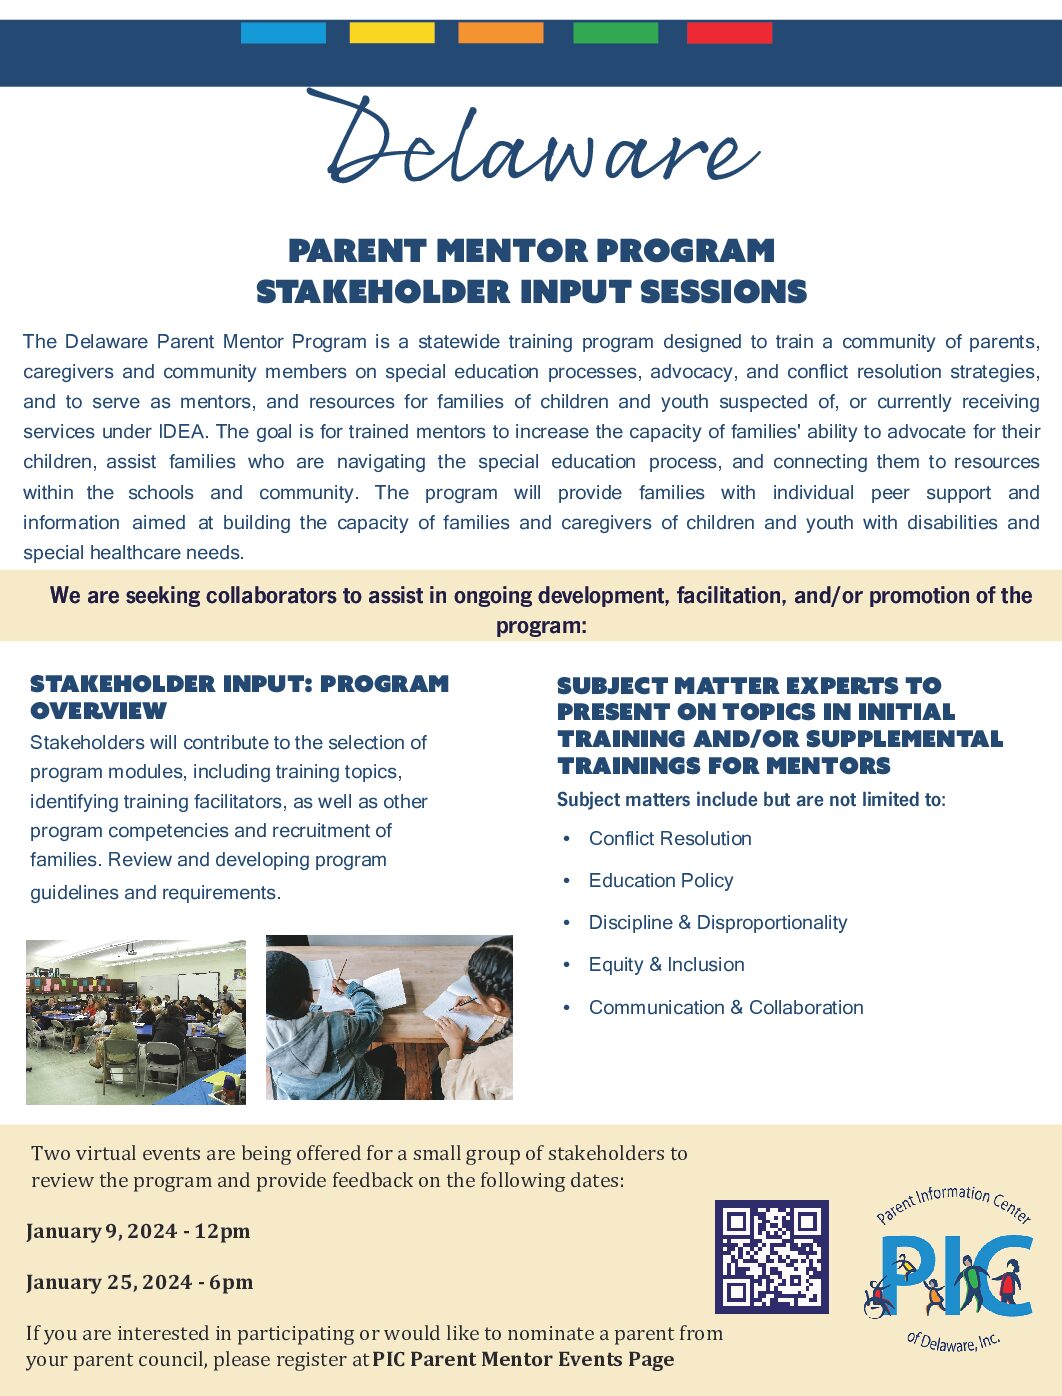 Parent Mentor Program Stakeholder Input Sessions